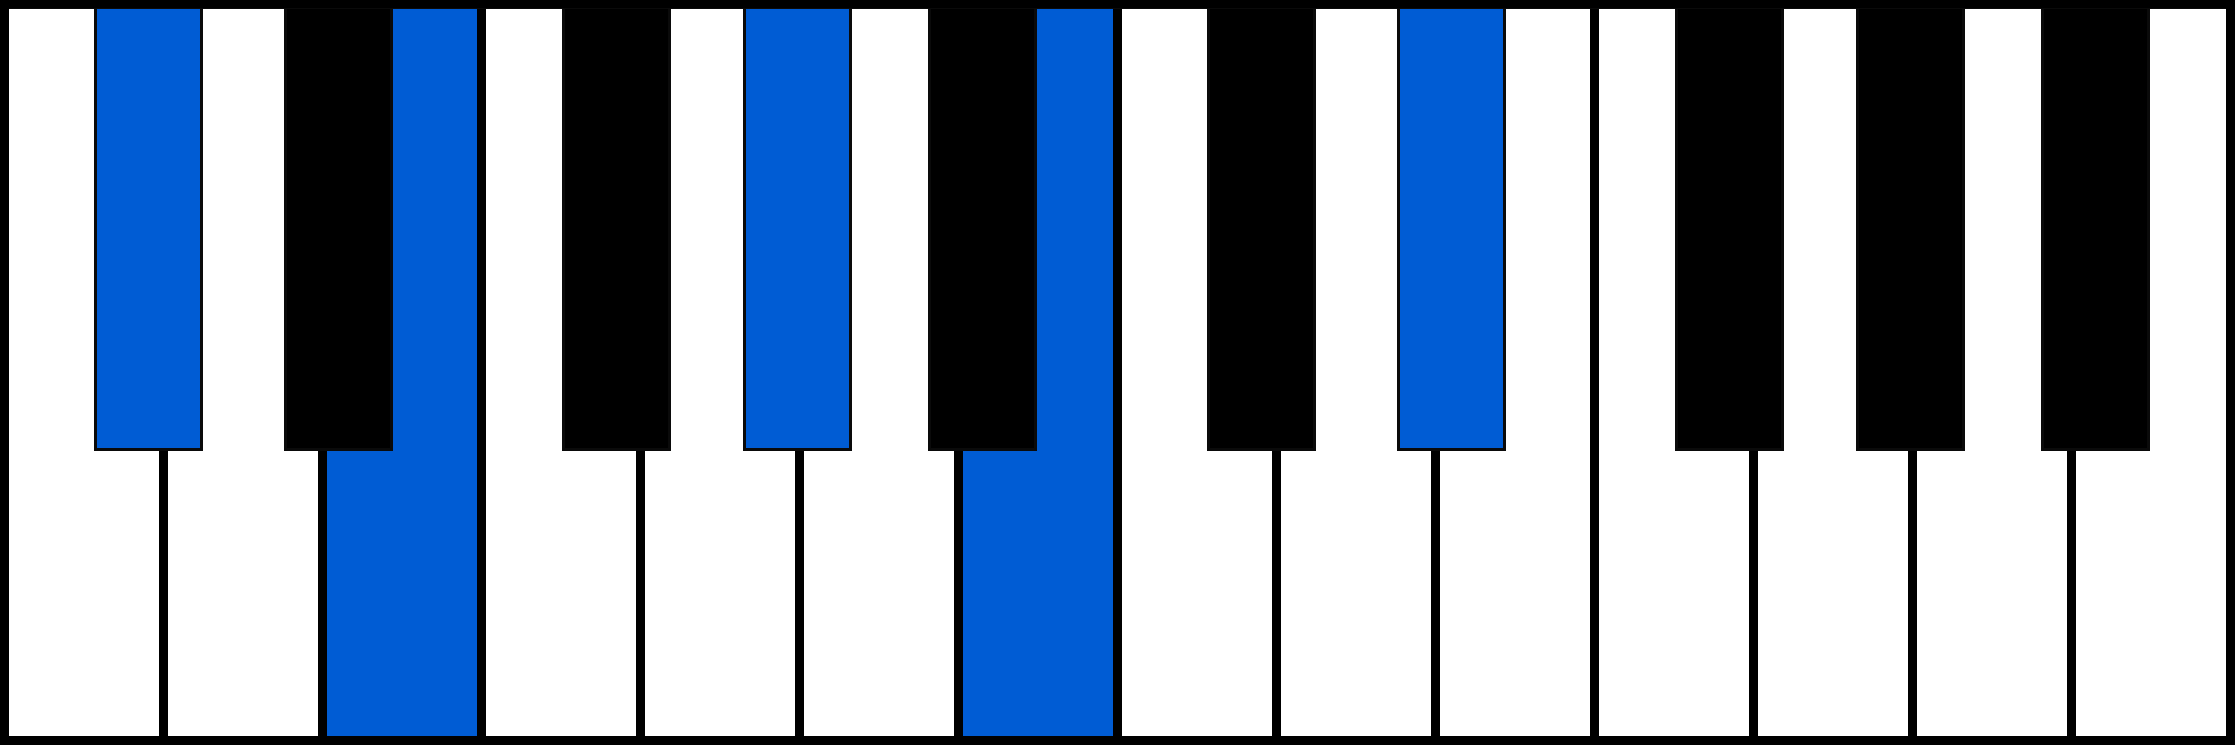 C#m9 piano chord fingering